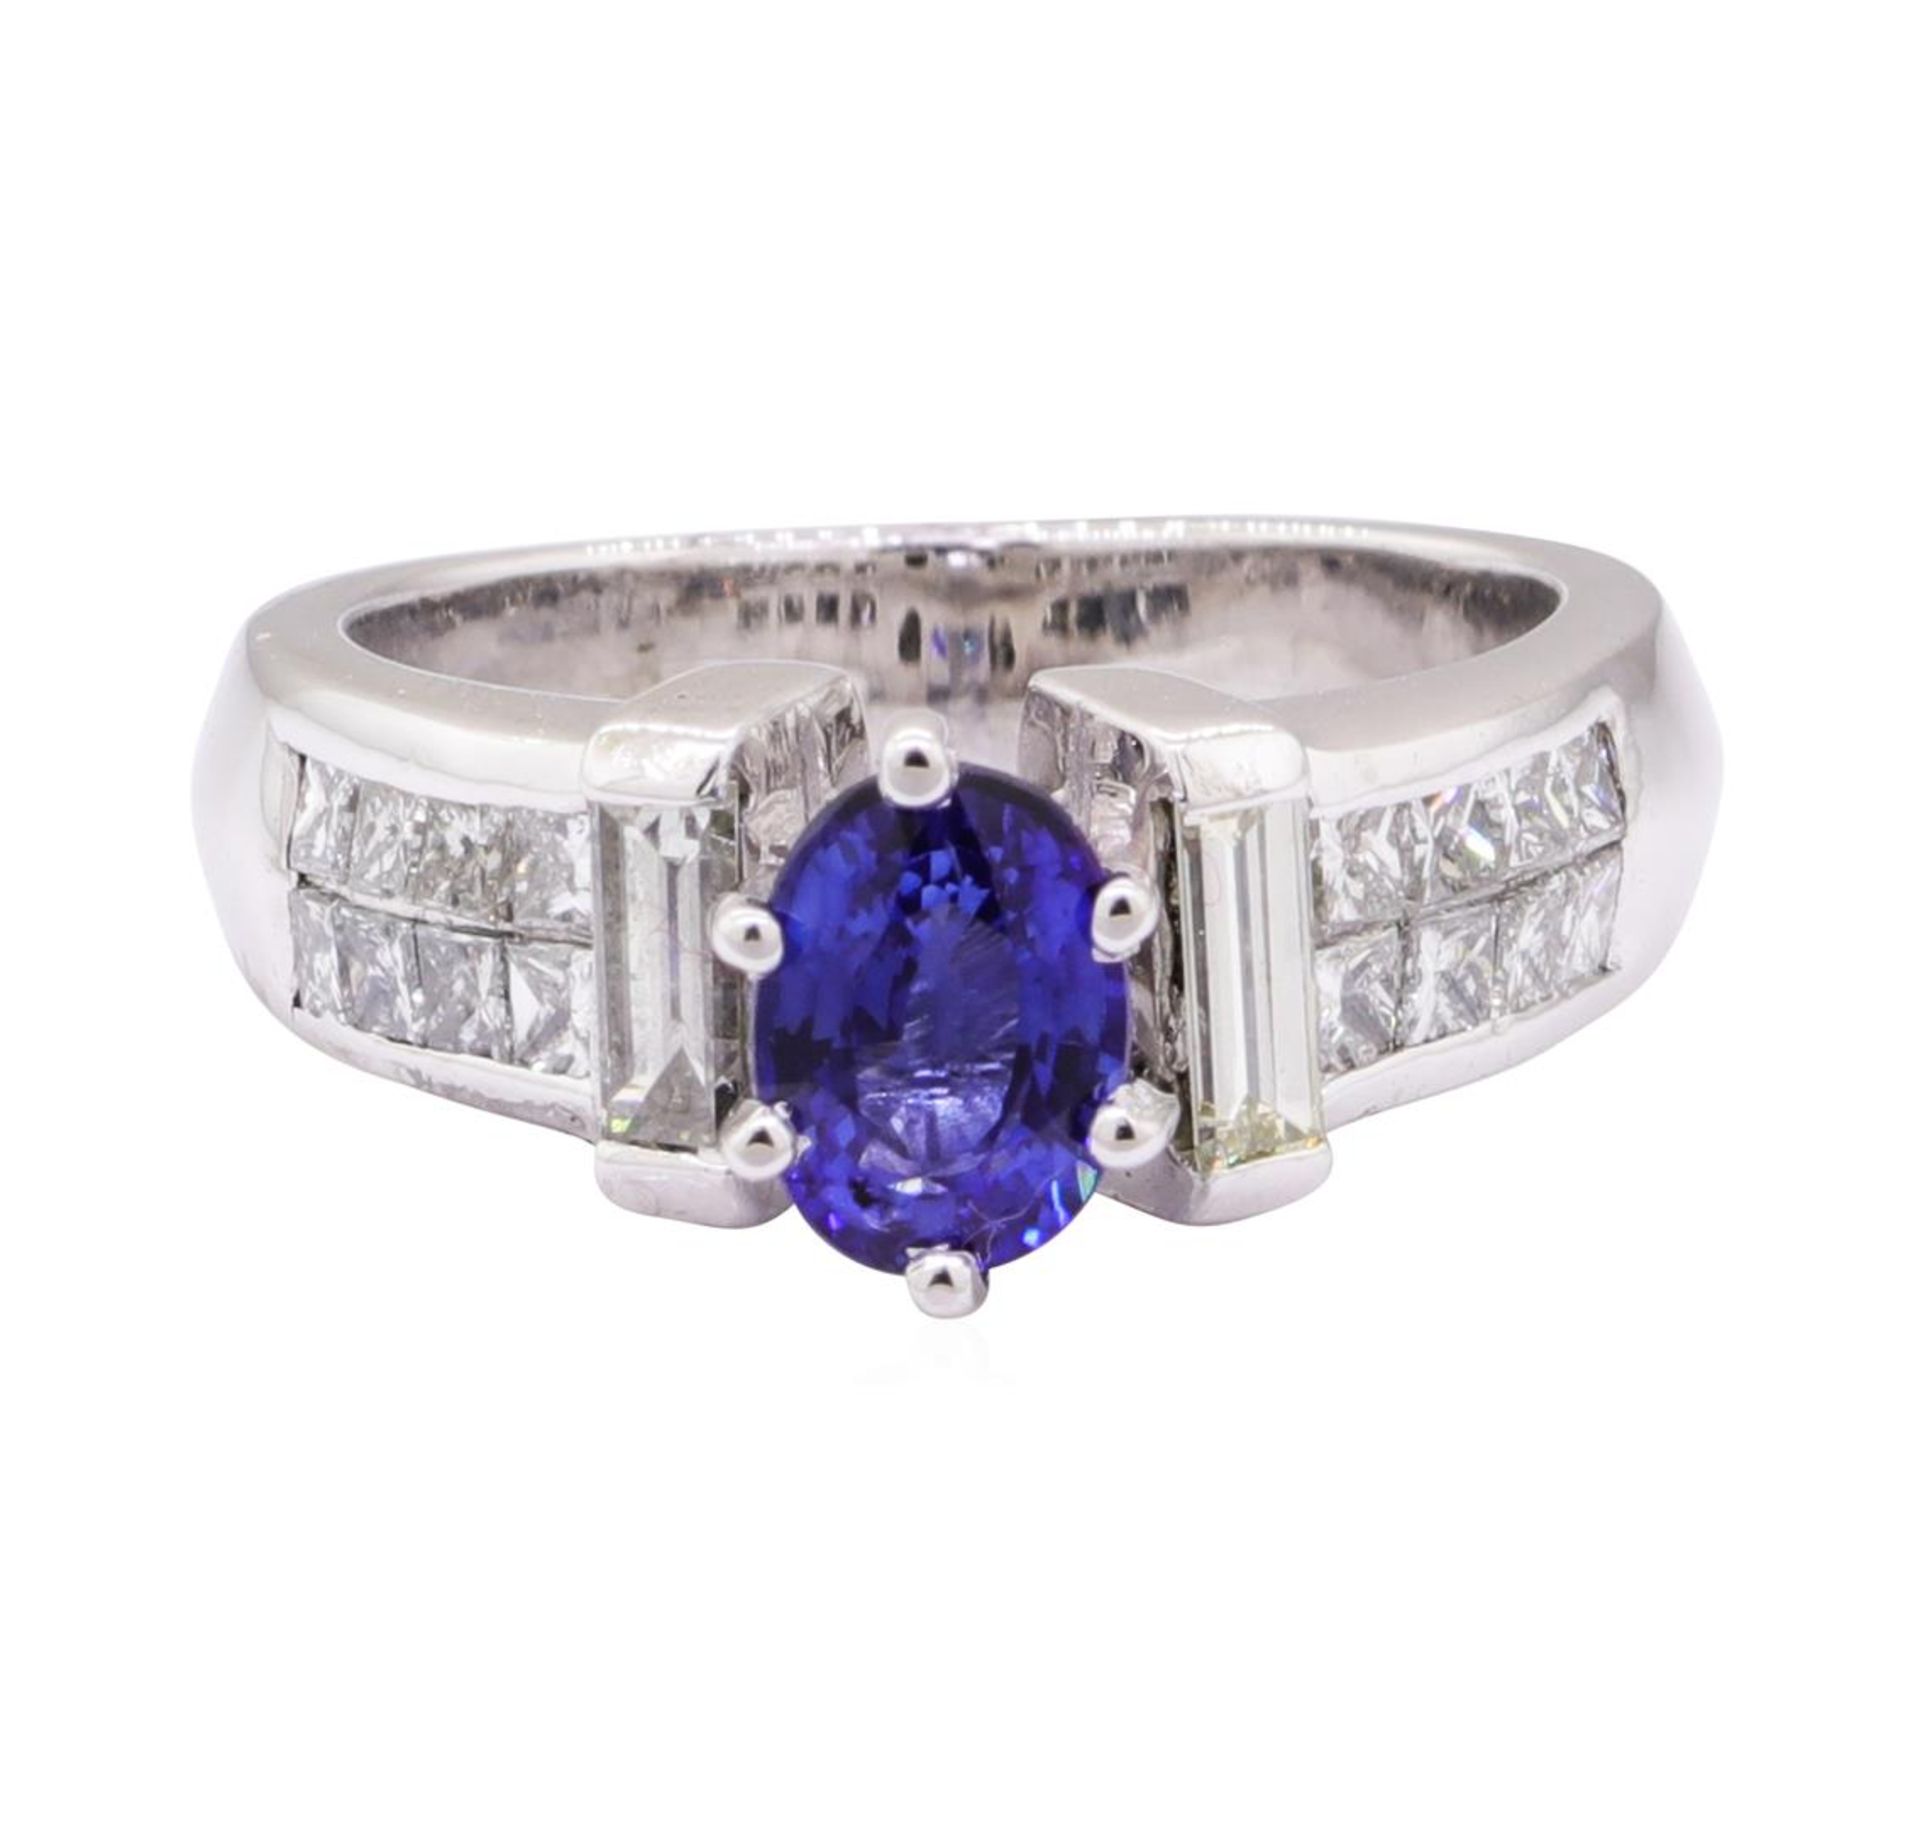 2.29 ctw Blue Sapphire And Diamond Ring - Platinum - Image 2 of 5